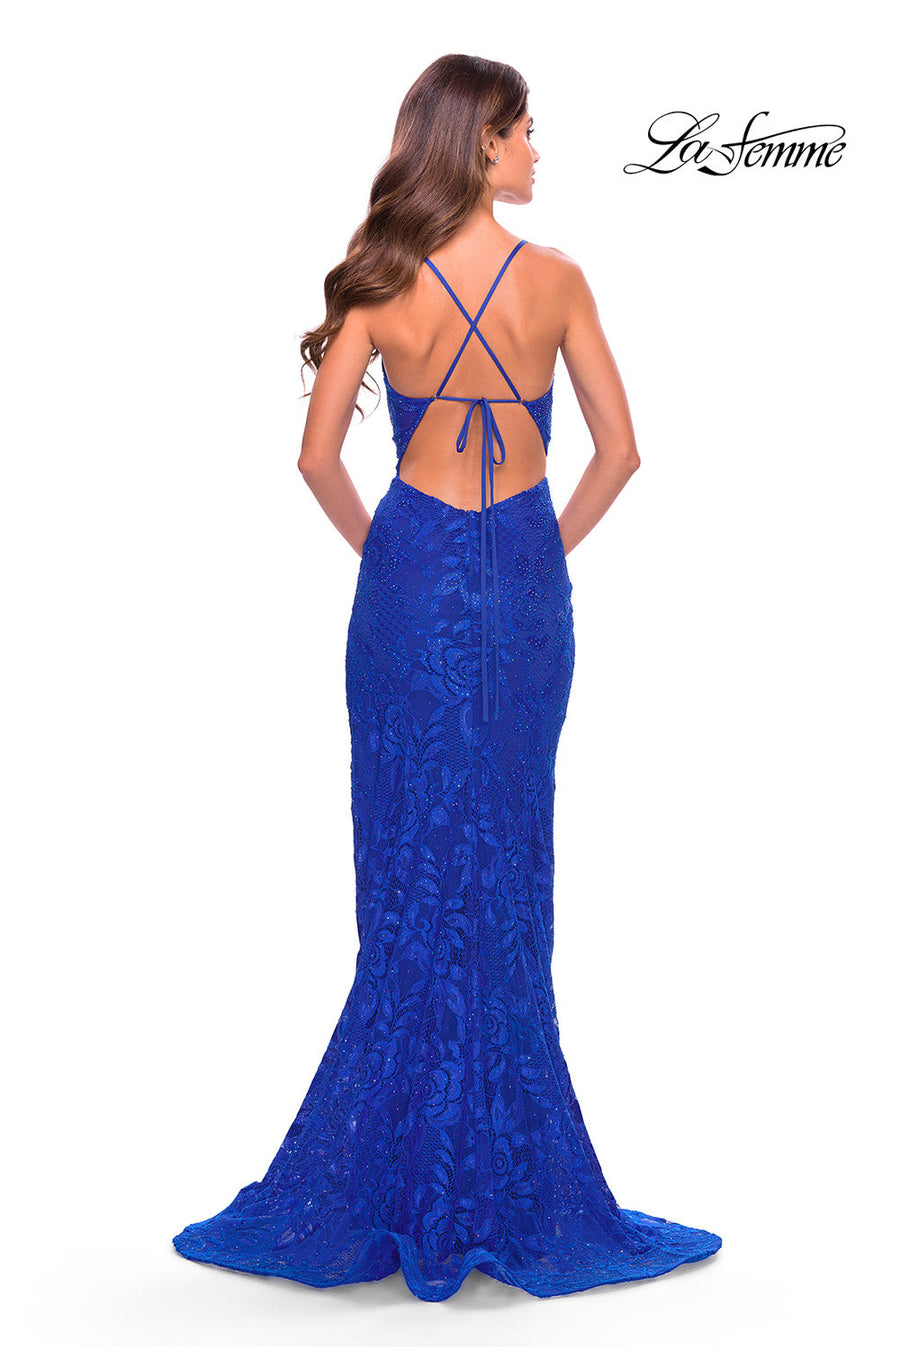 La Femme 31288 prom dress images.  La Femme 31288 is available in these colors: Black, Dark Emerald, Royal Blue, Sage.